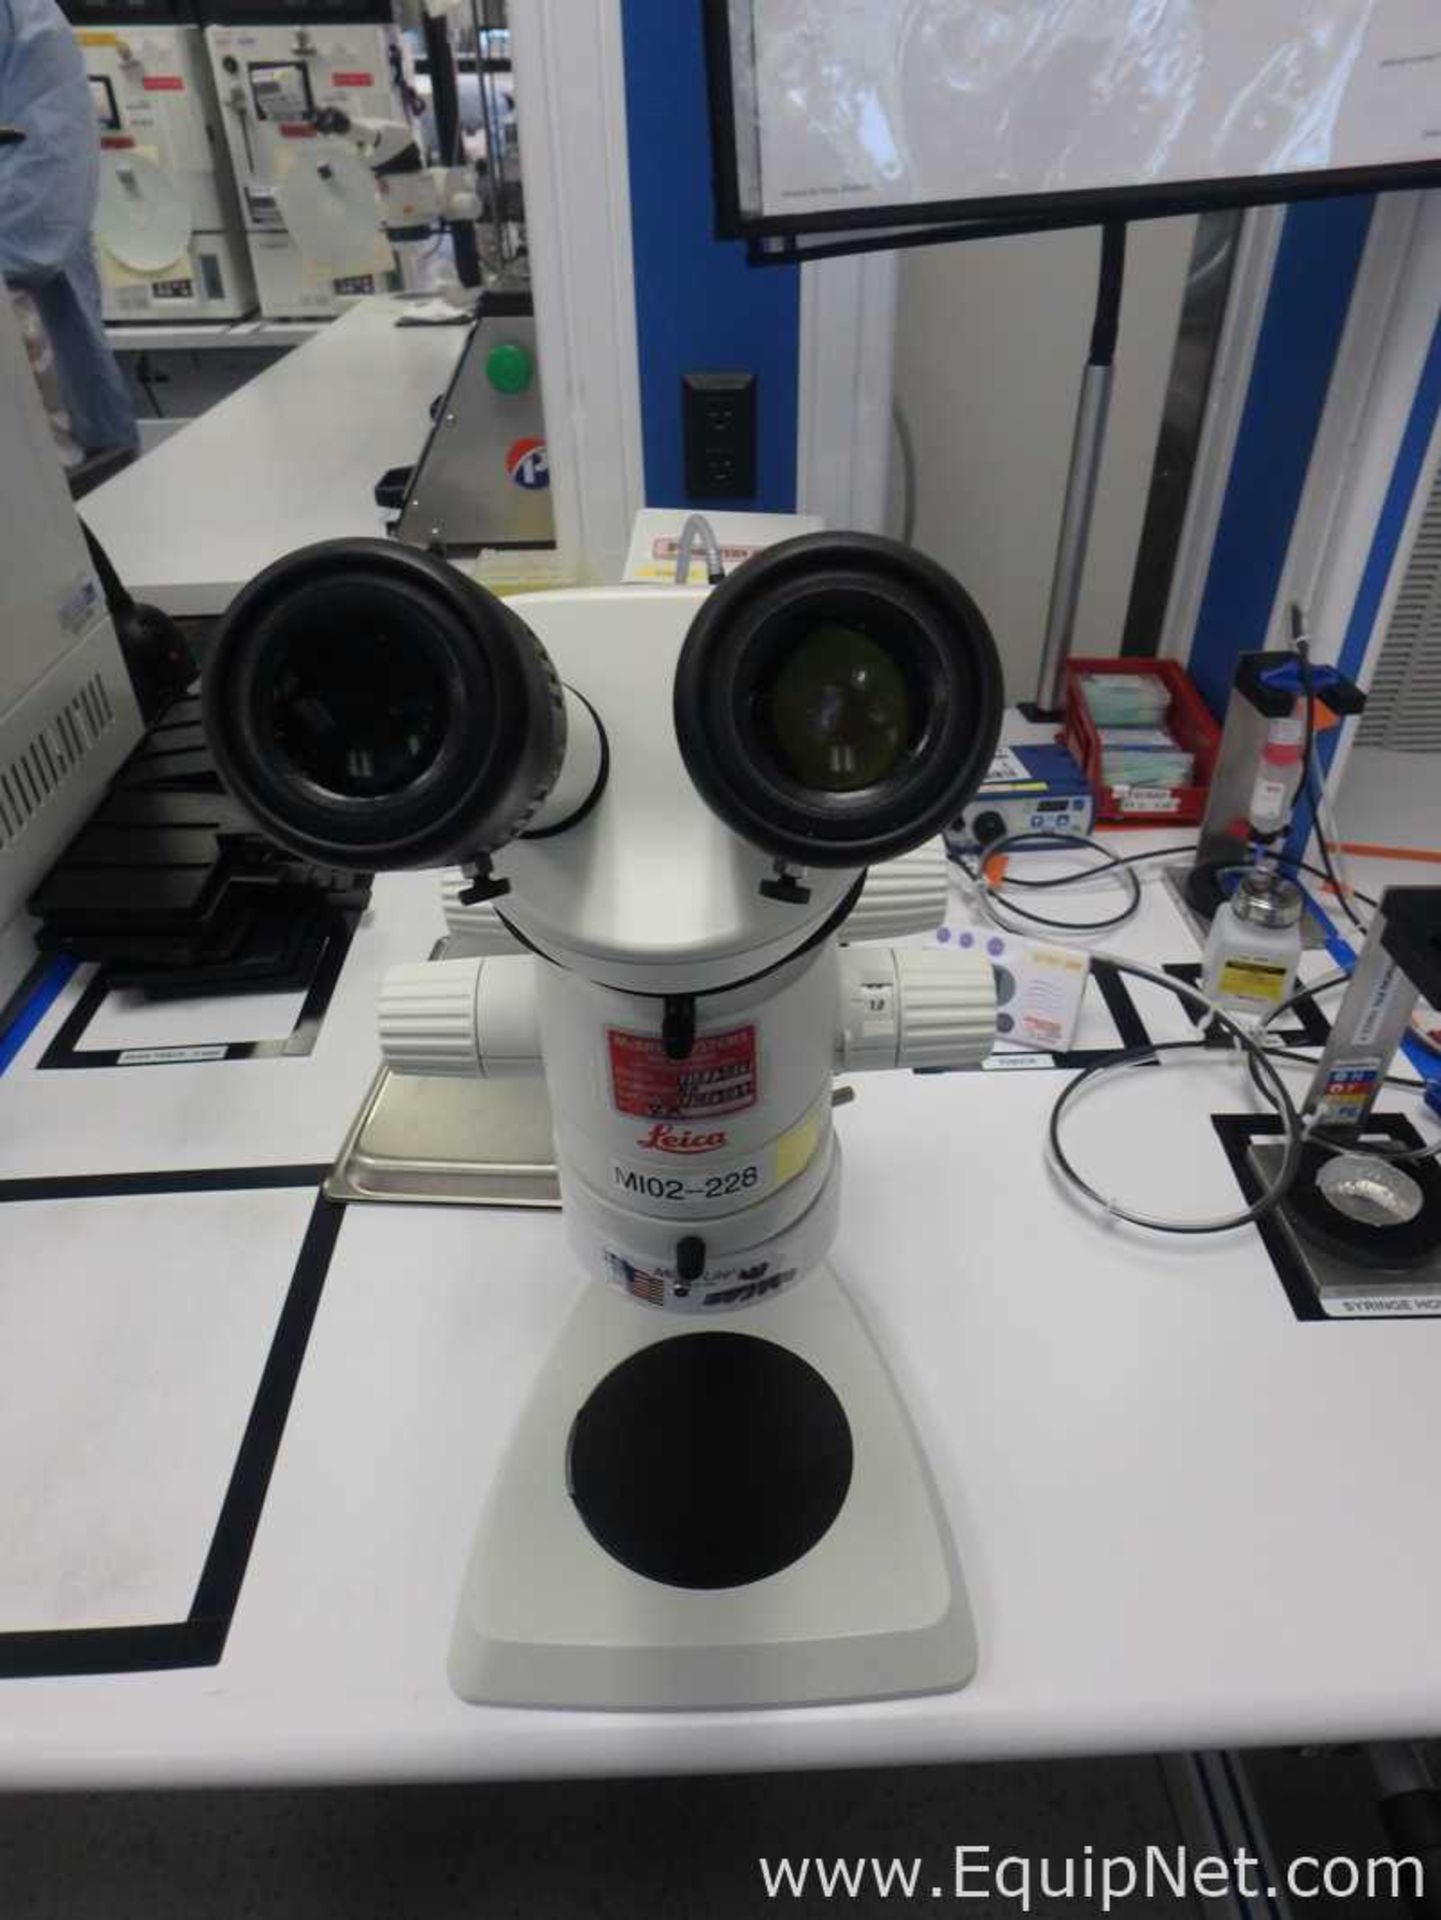 Leica MZ6 Microscope